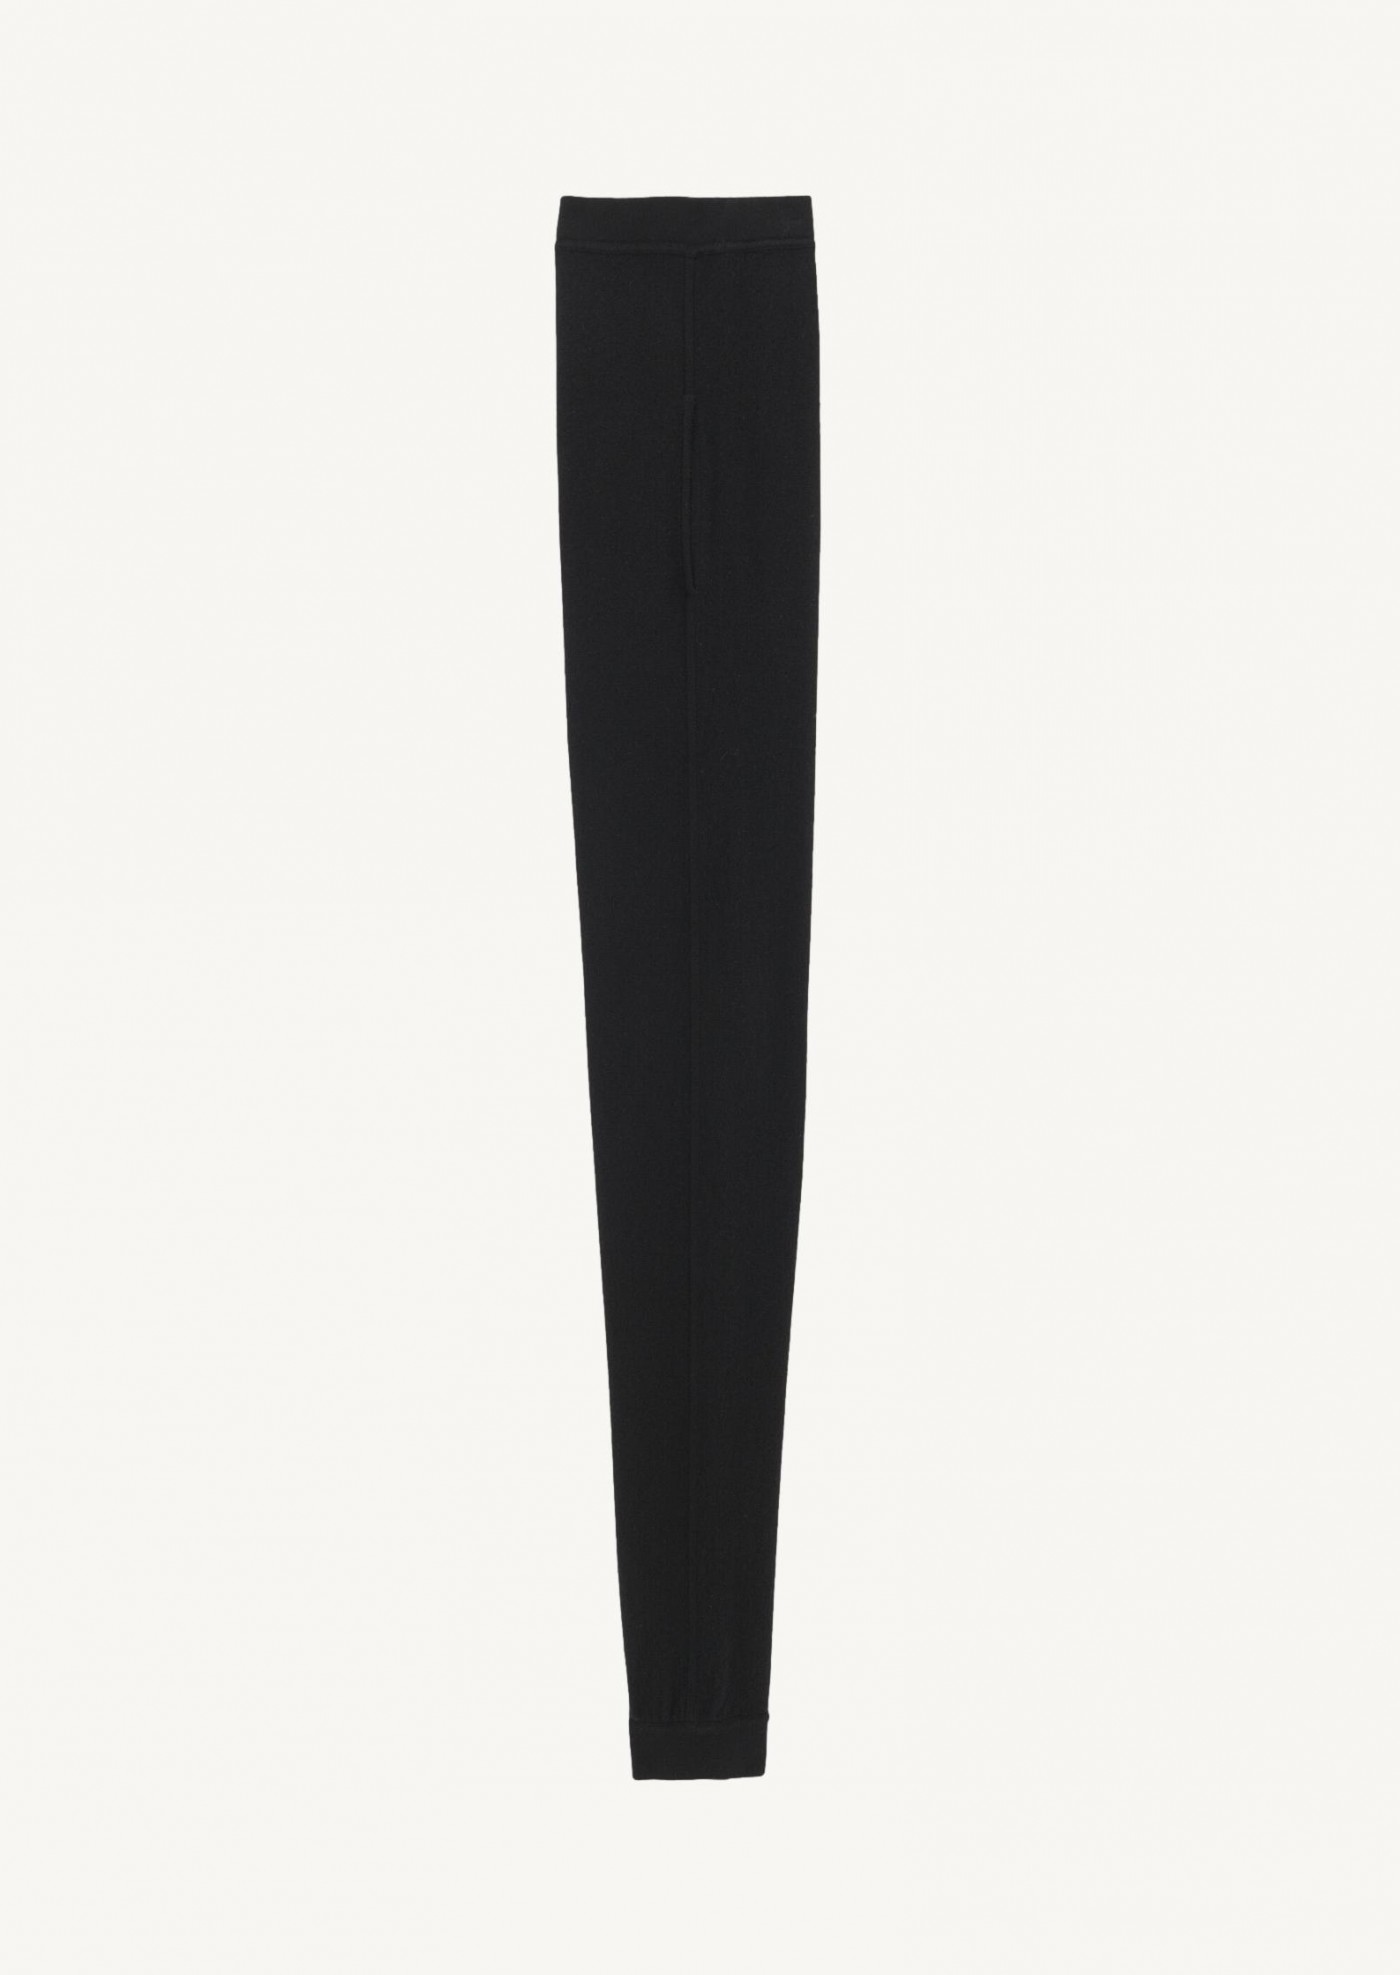 Black cashmere high-waisted legging